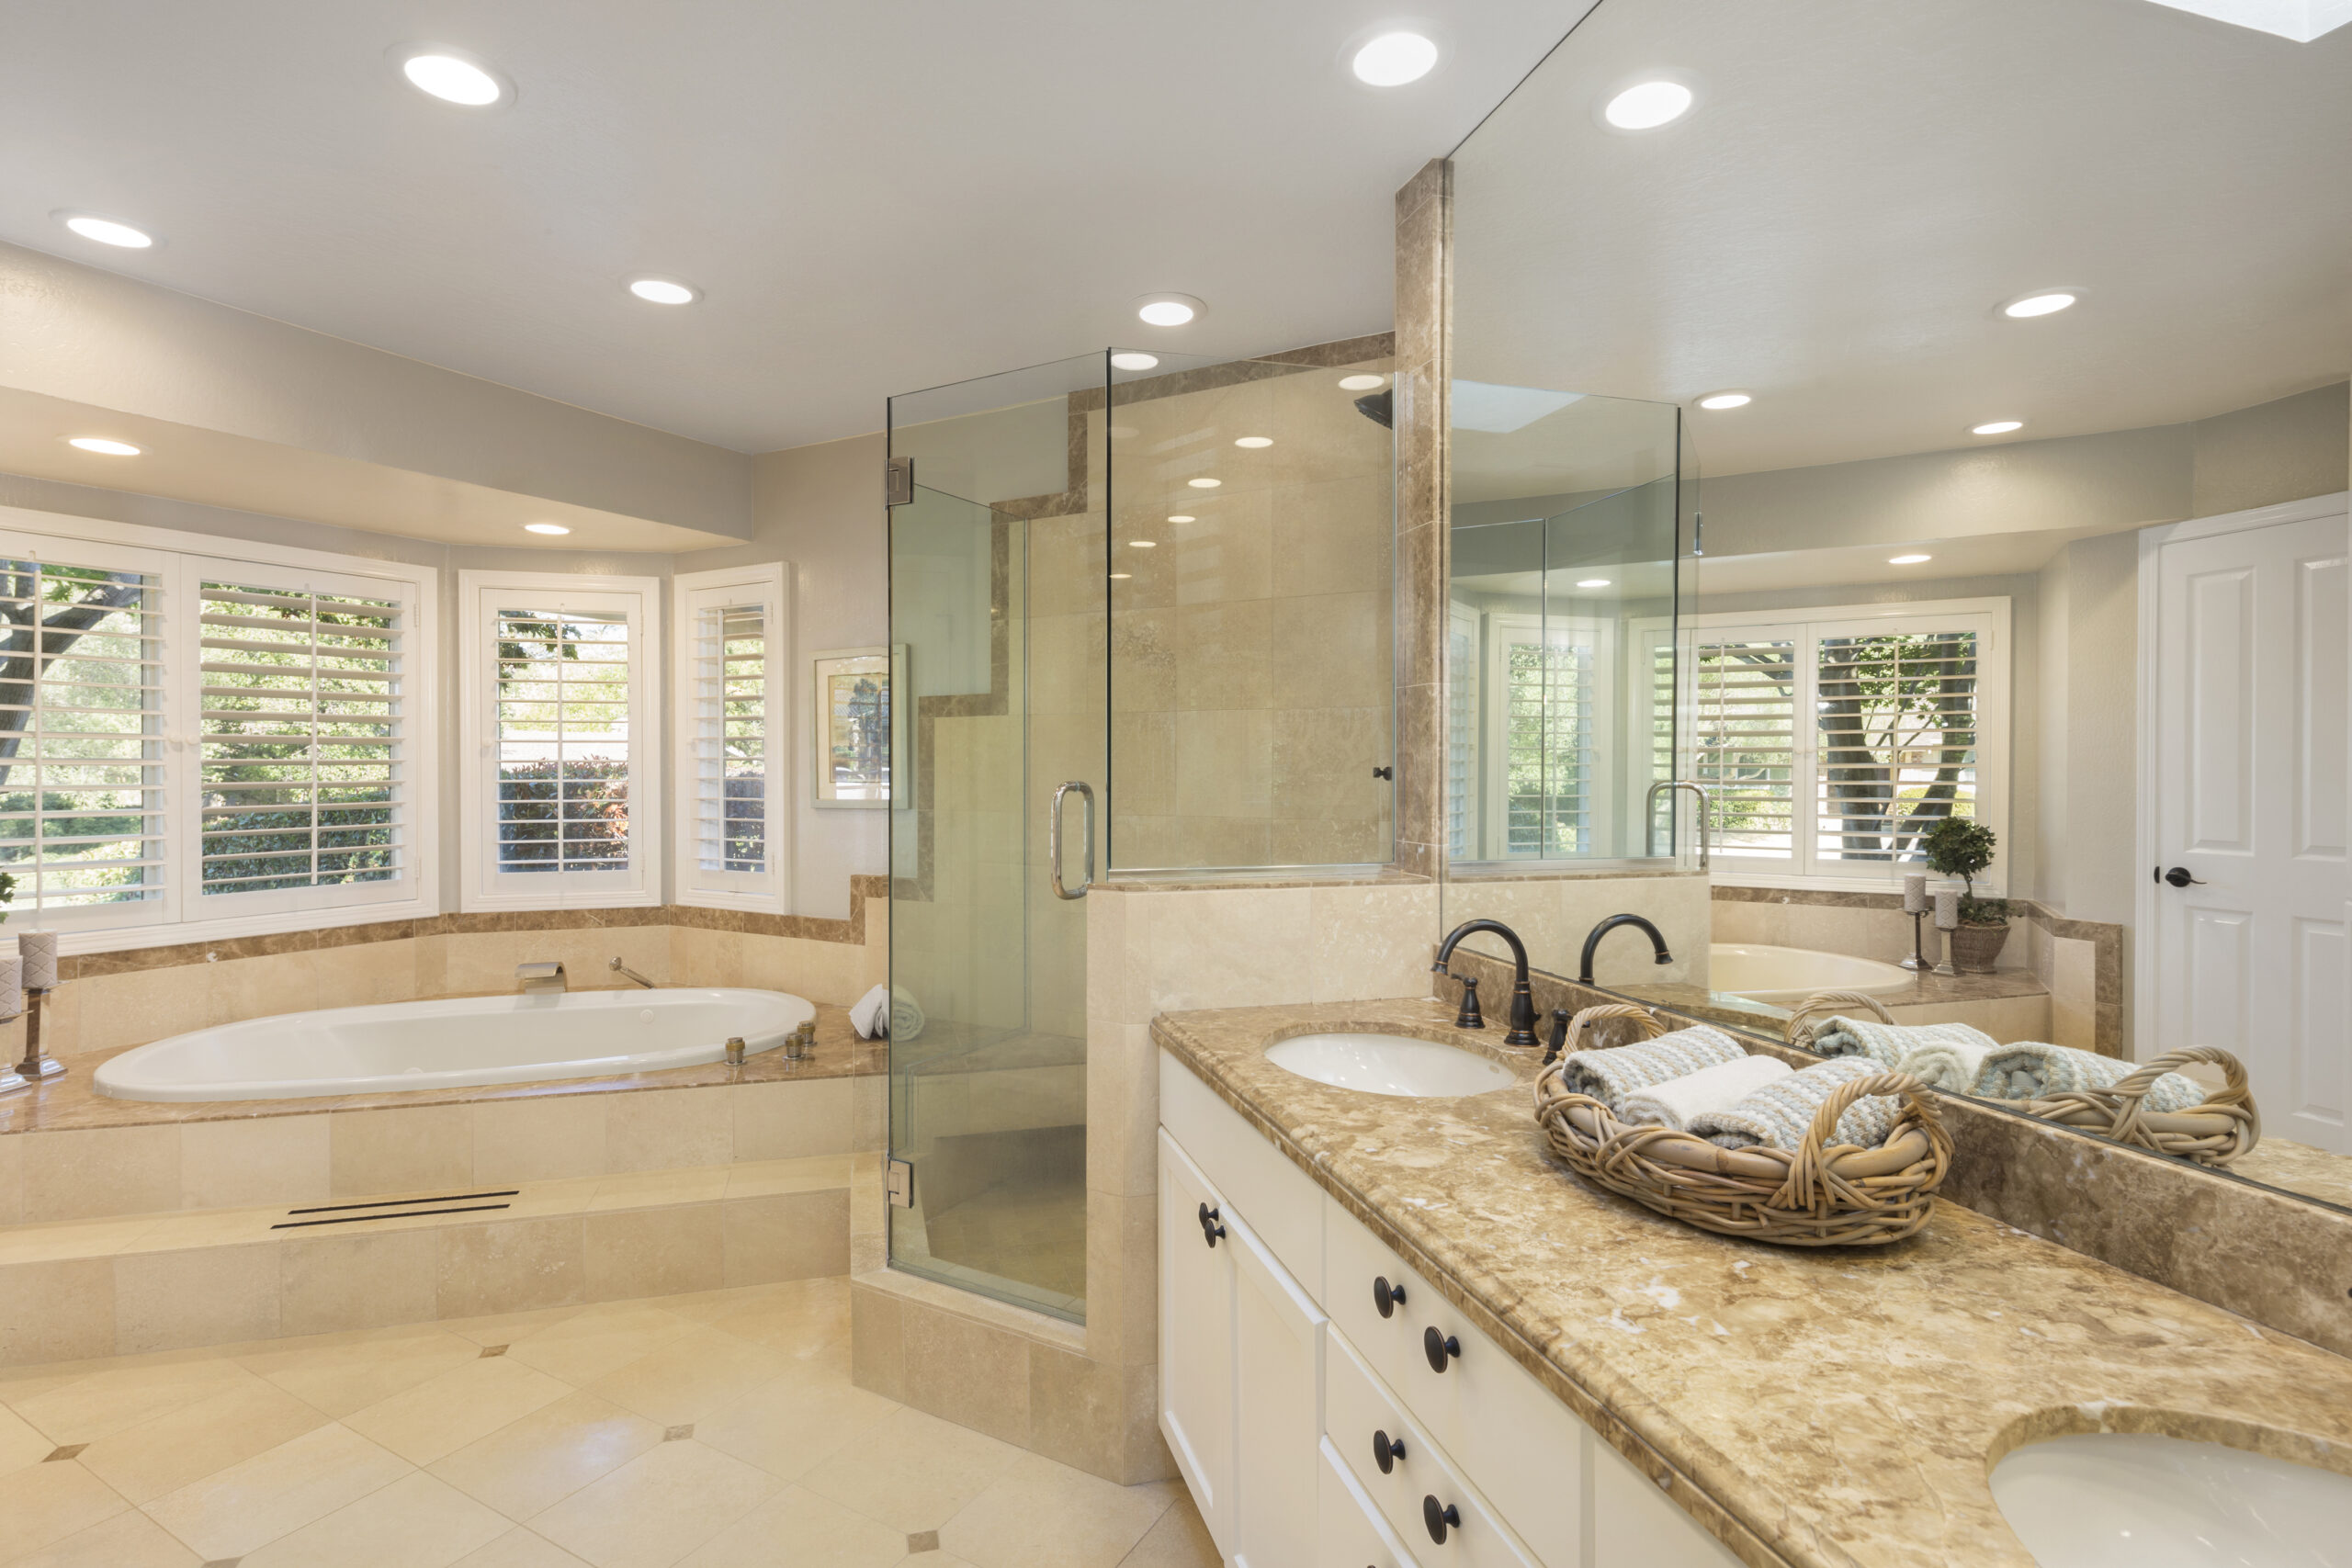 brand new bathroom renovtion tulsa bathroom remodeler best tile anc cabinet install